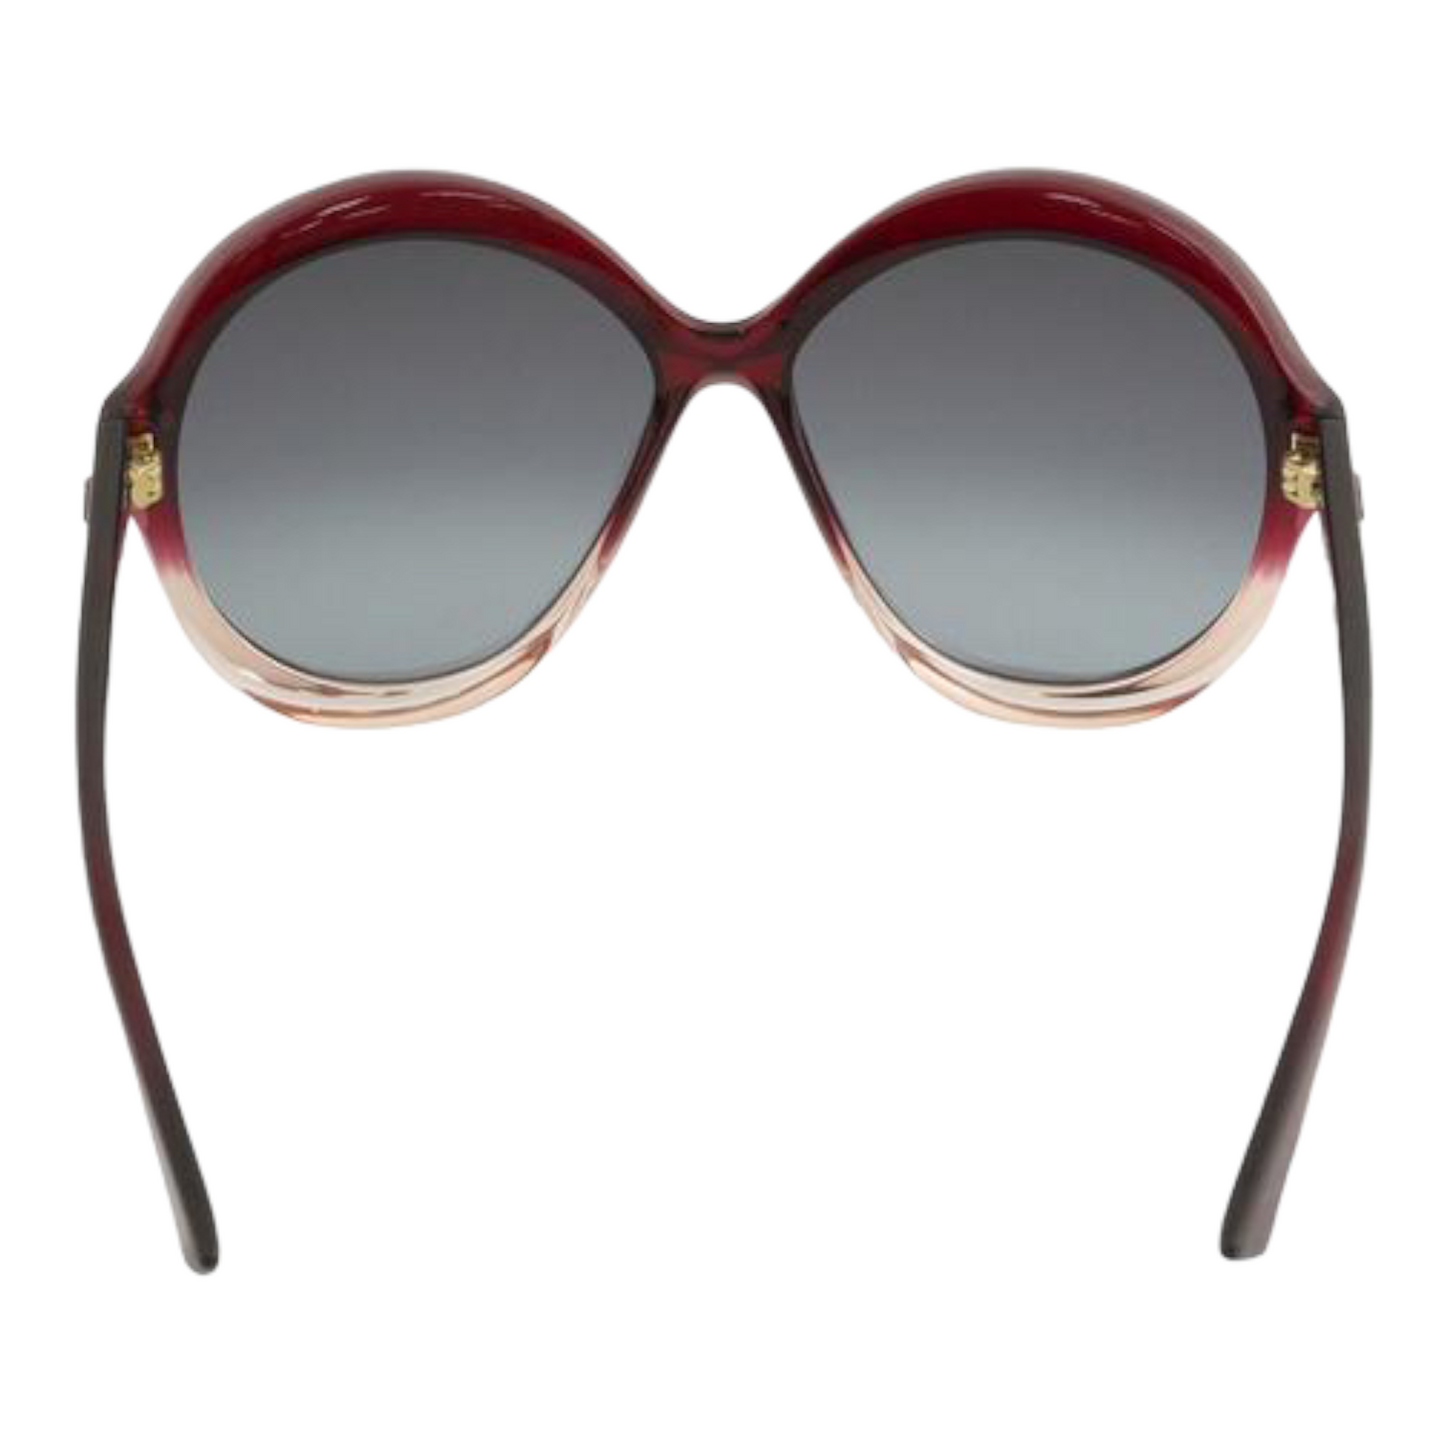 Christian Dior “Dior Bianca” Fashion Round Sunglasses